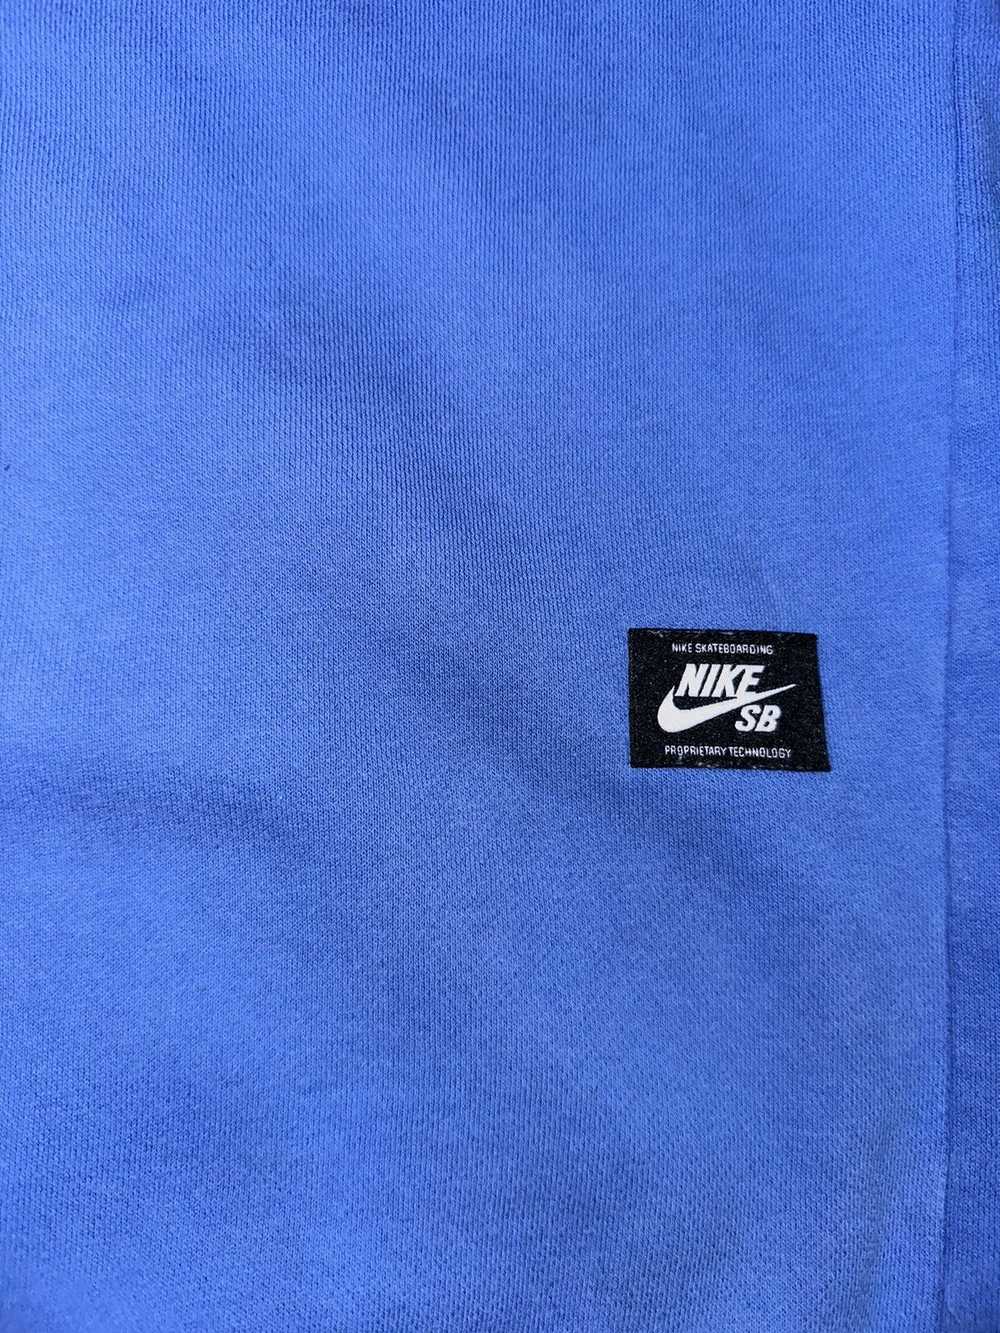 Nike Nike SB hoodie - image 3